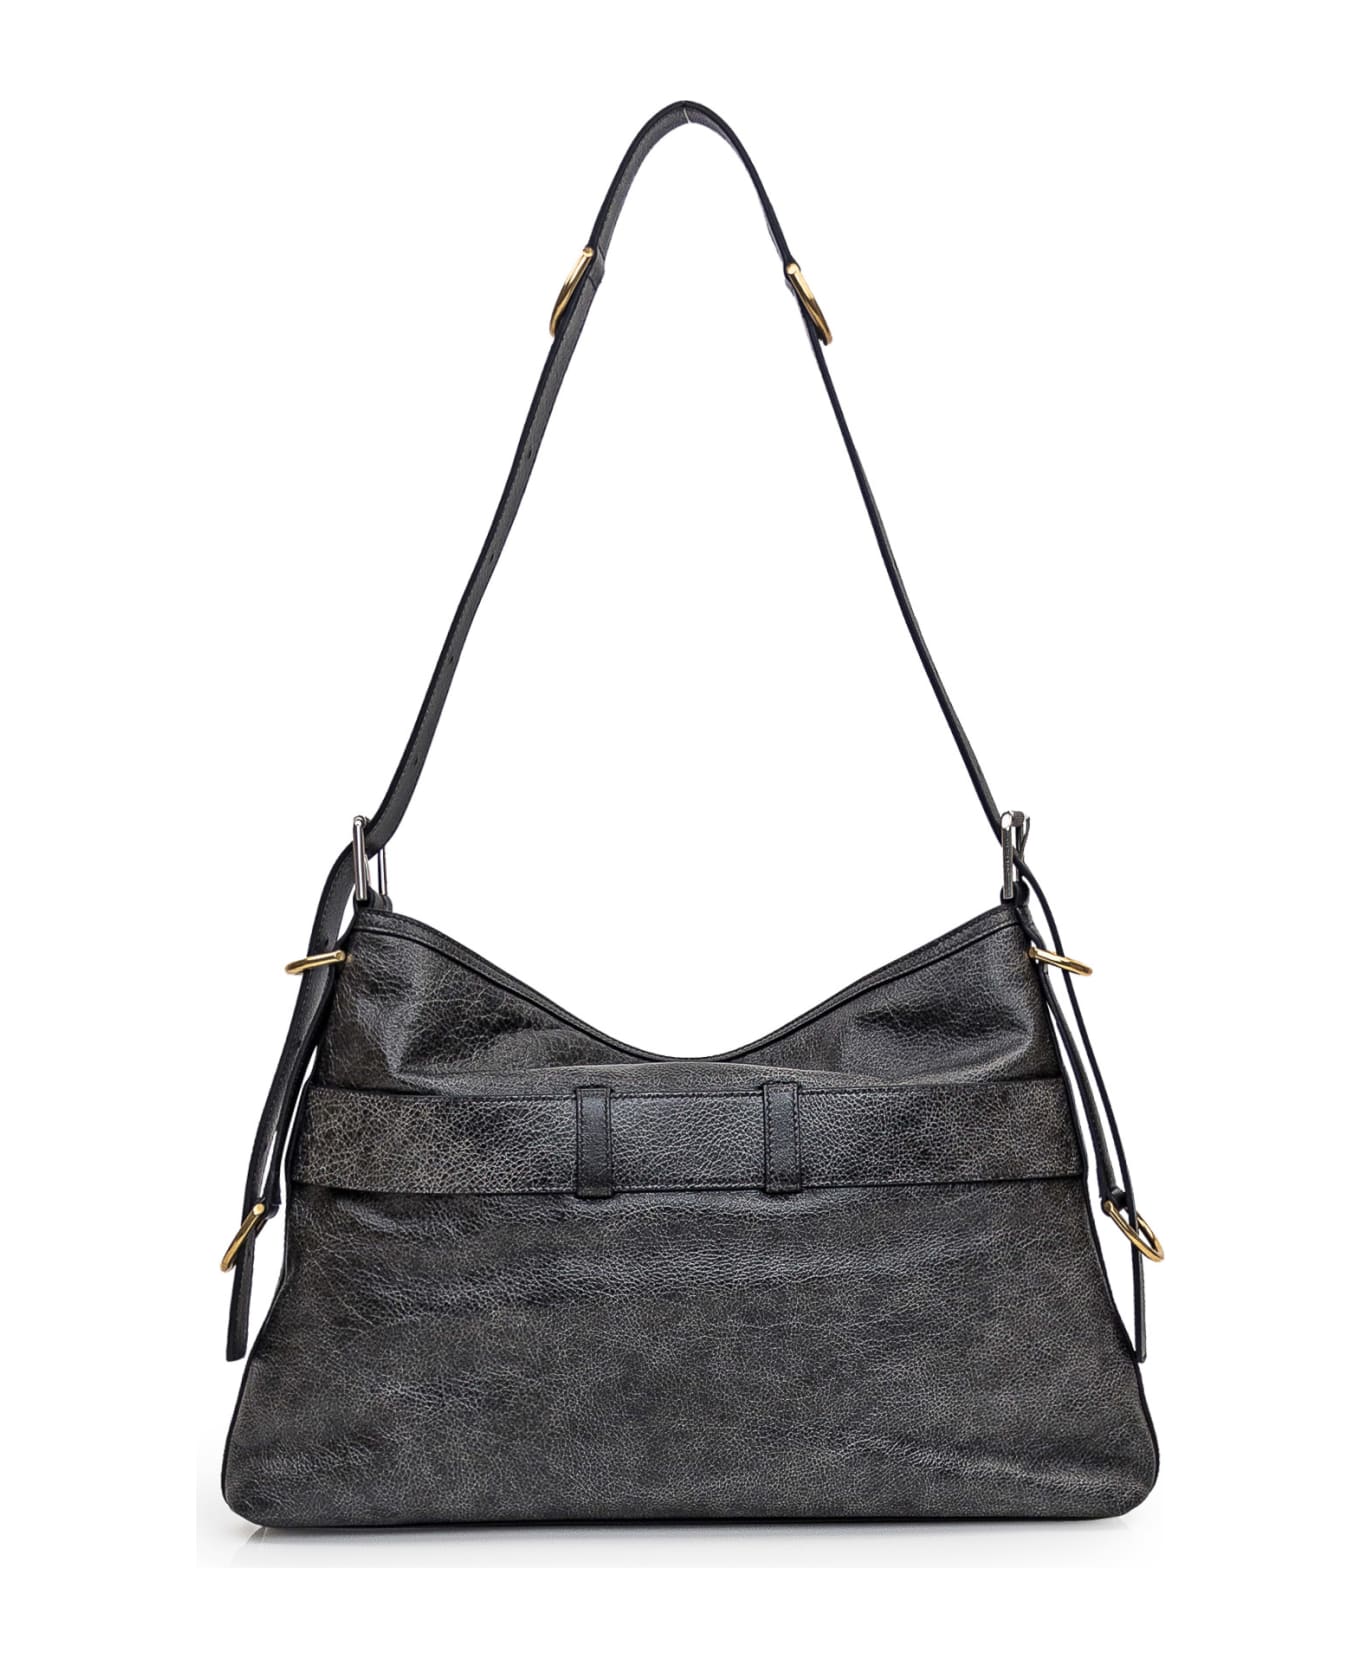 Givenchy Voyou Medium Bag - Black